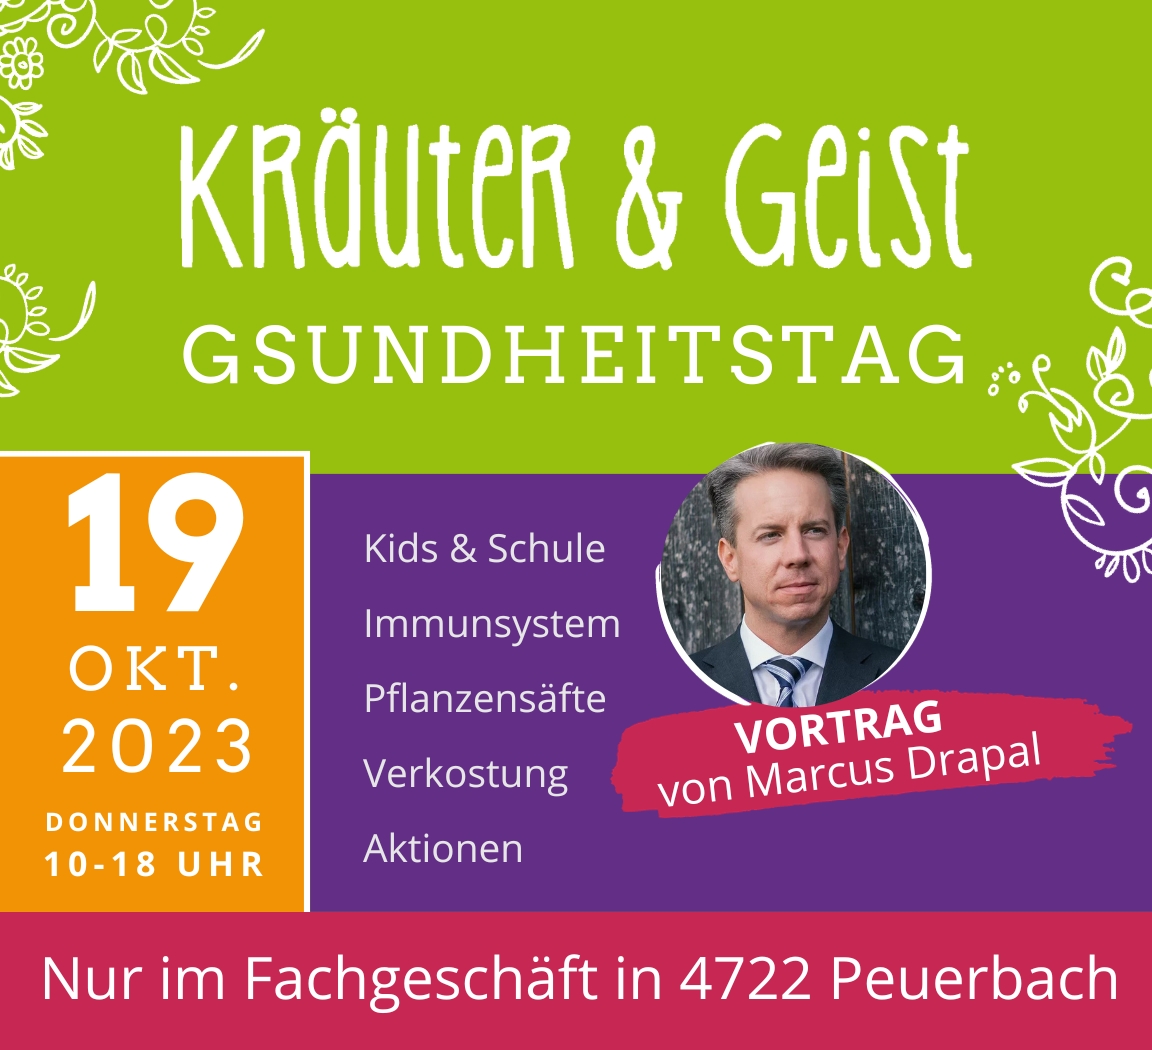 Kräuter & Geist GSUNDHEITSTAG, 19. Oktober 2023